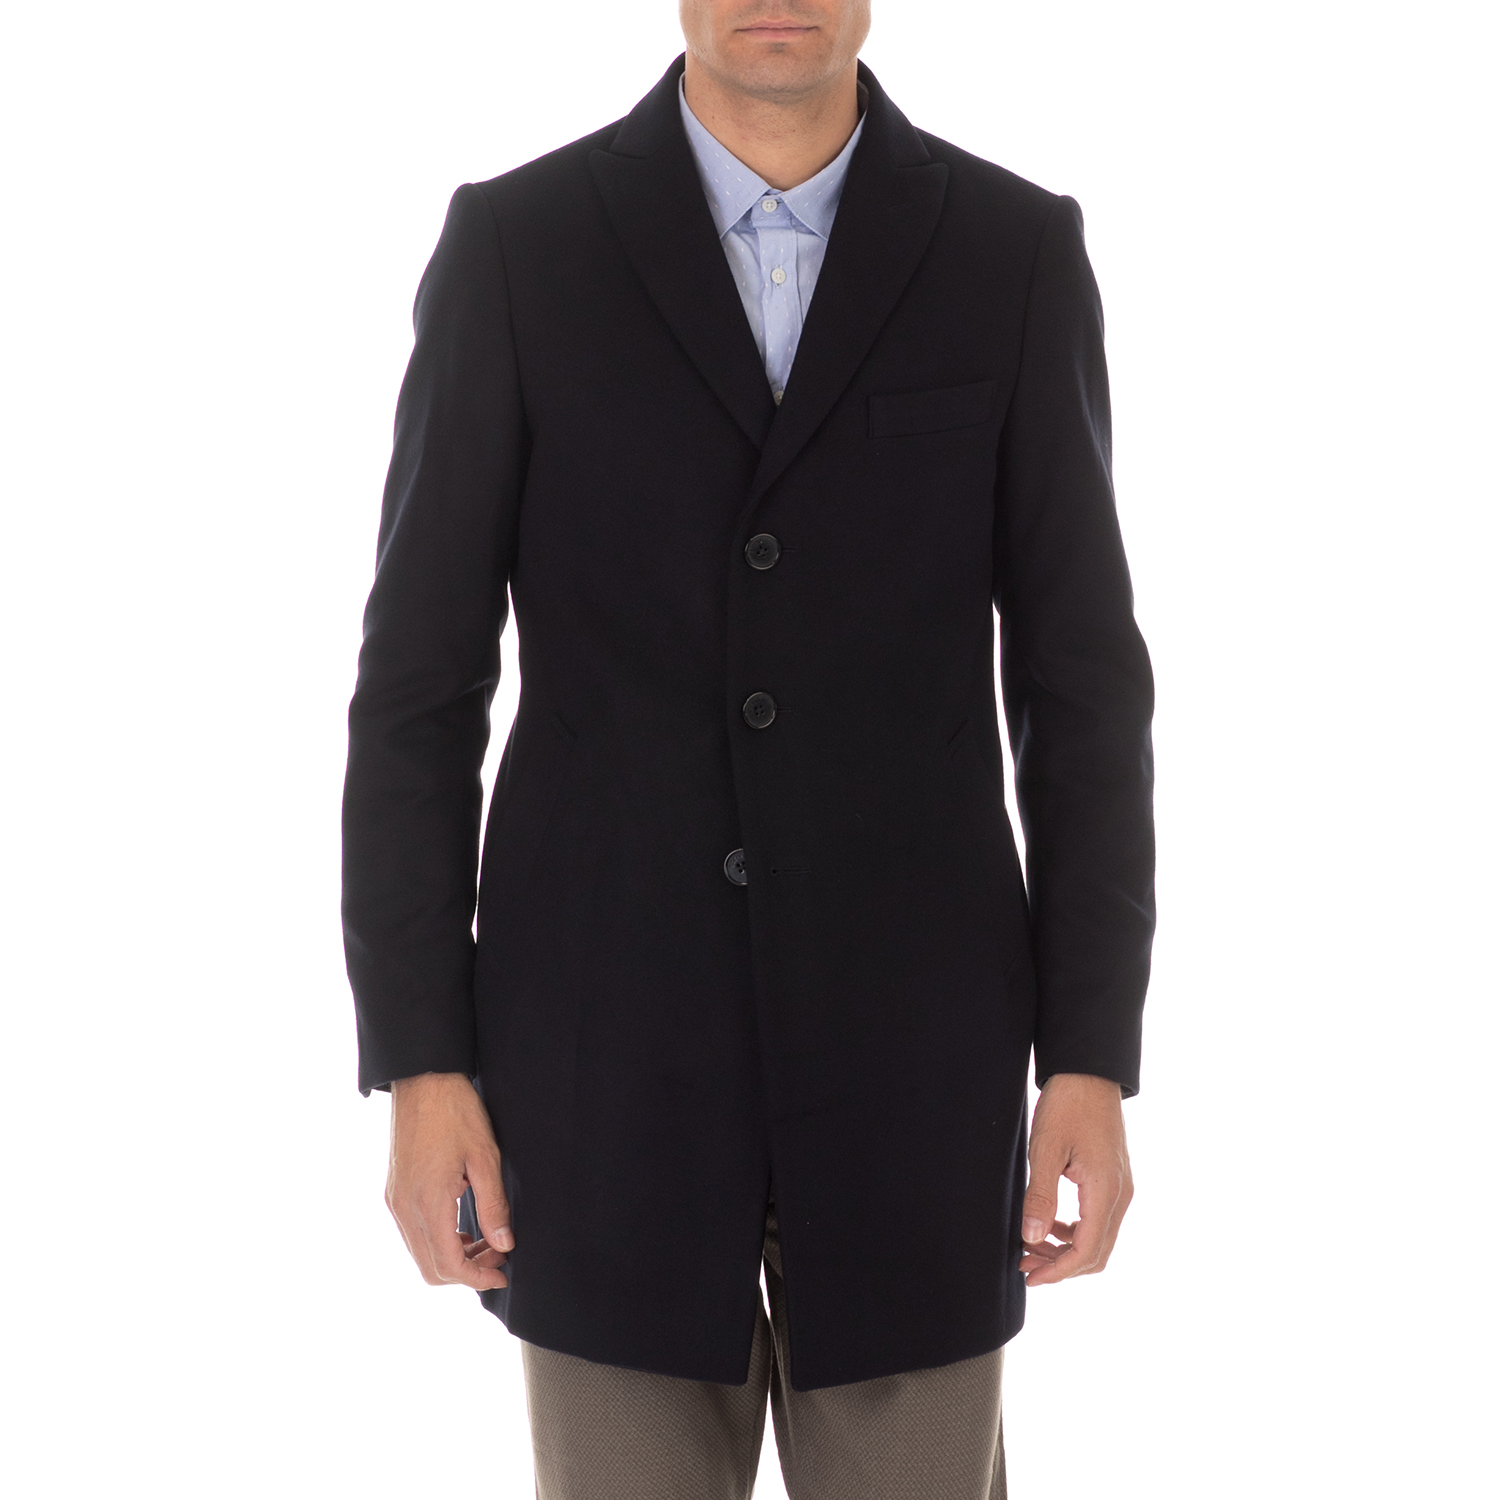 SSEINSE - Ανδρικό παλτό SSEINSE CAPPOTTO μπλε Ανδρικά/Ρούχα/Πανωφόρια/Παλτό